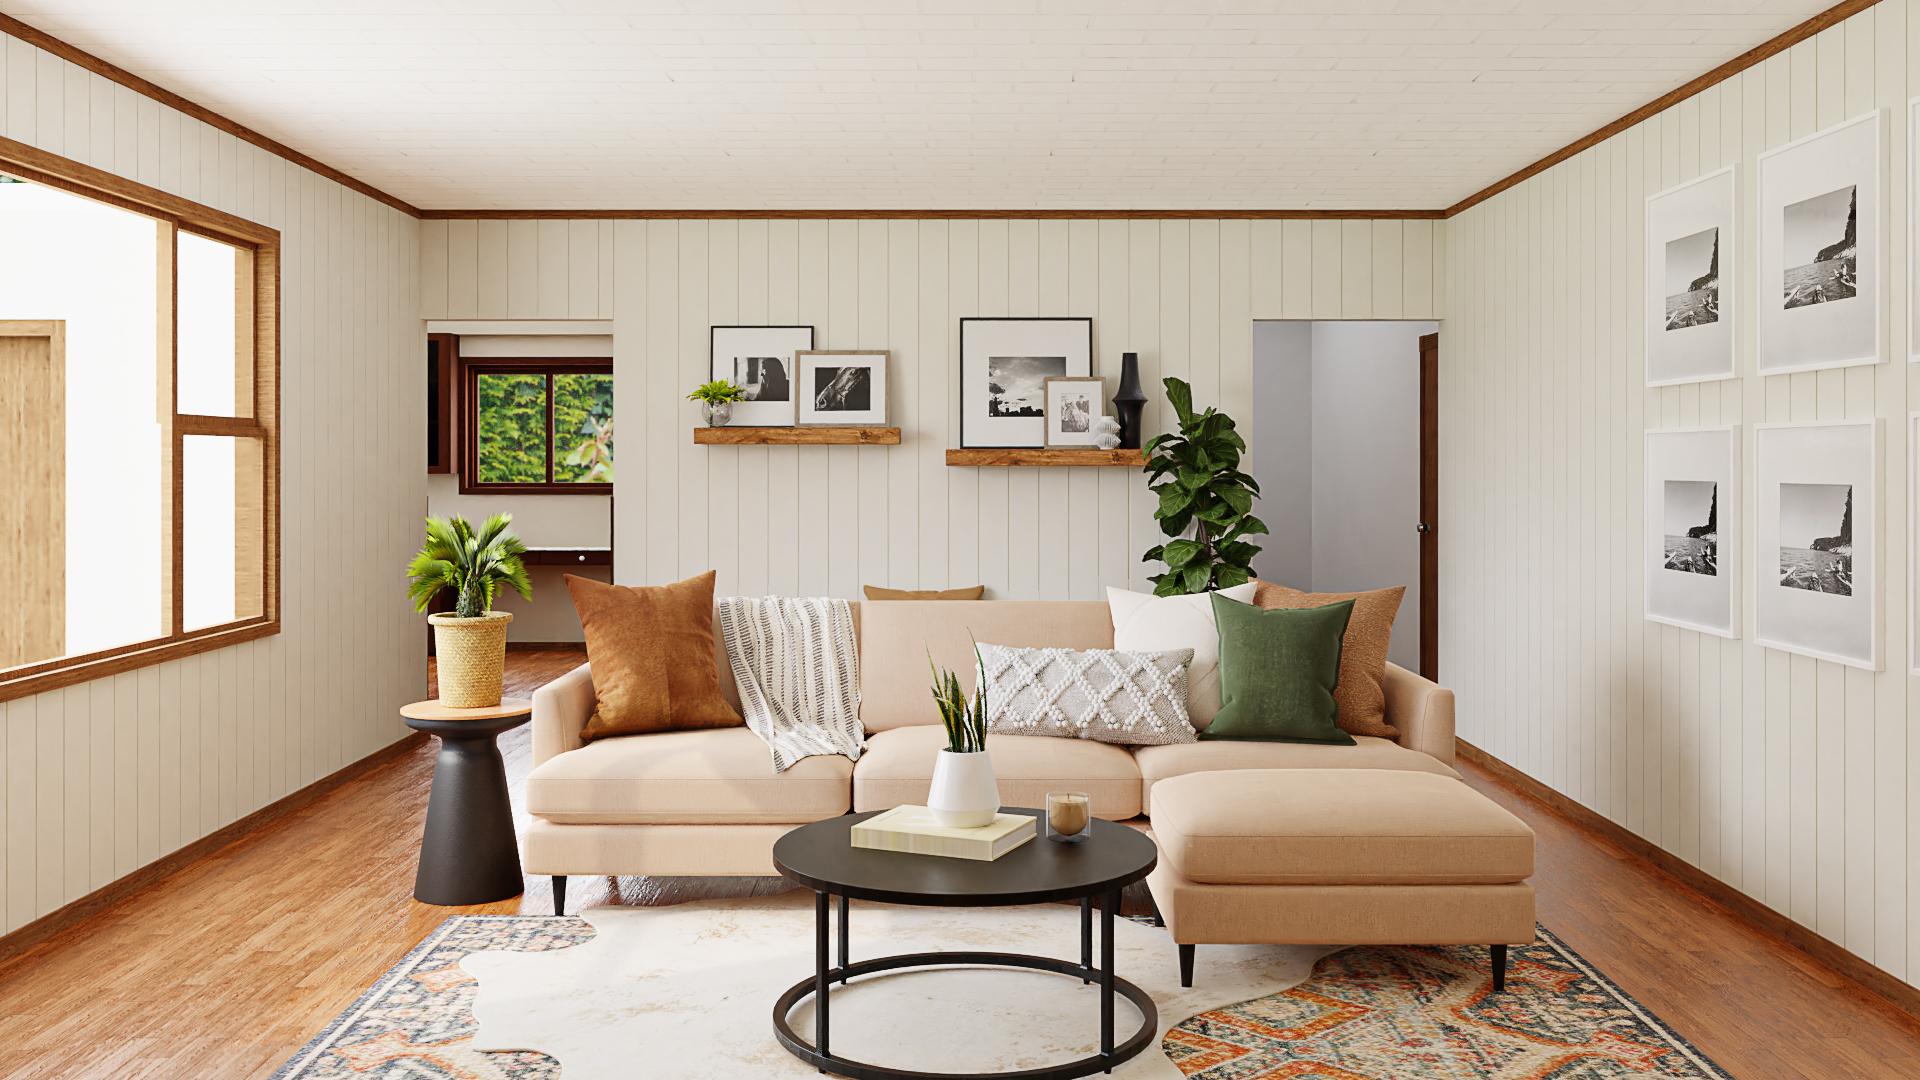 A Classic Mid-Century Rustic Living Room